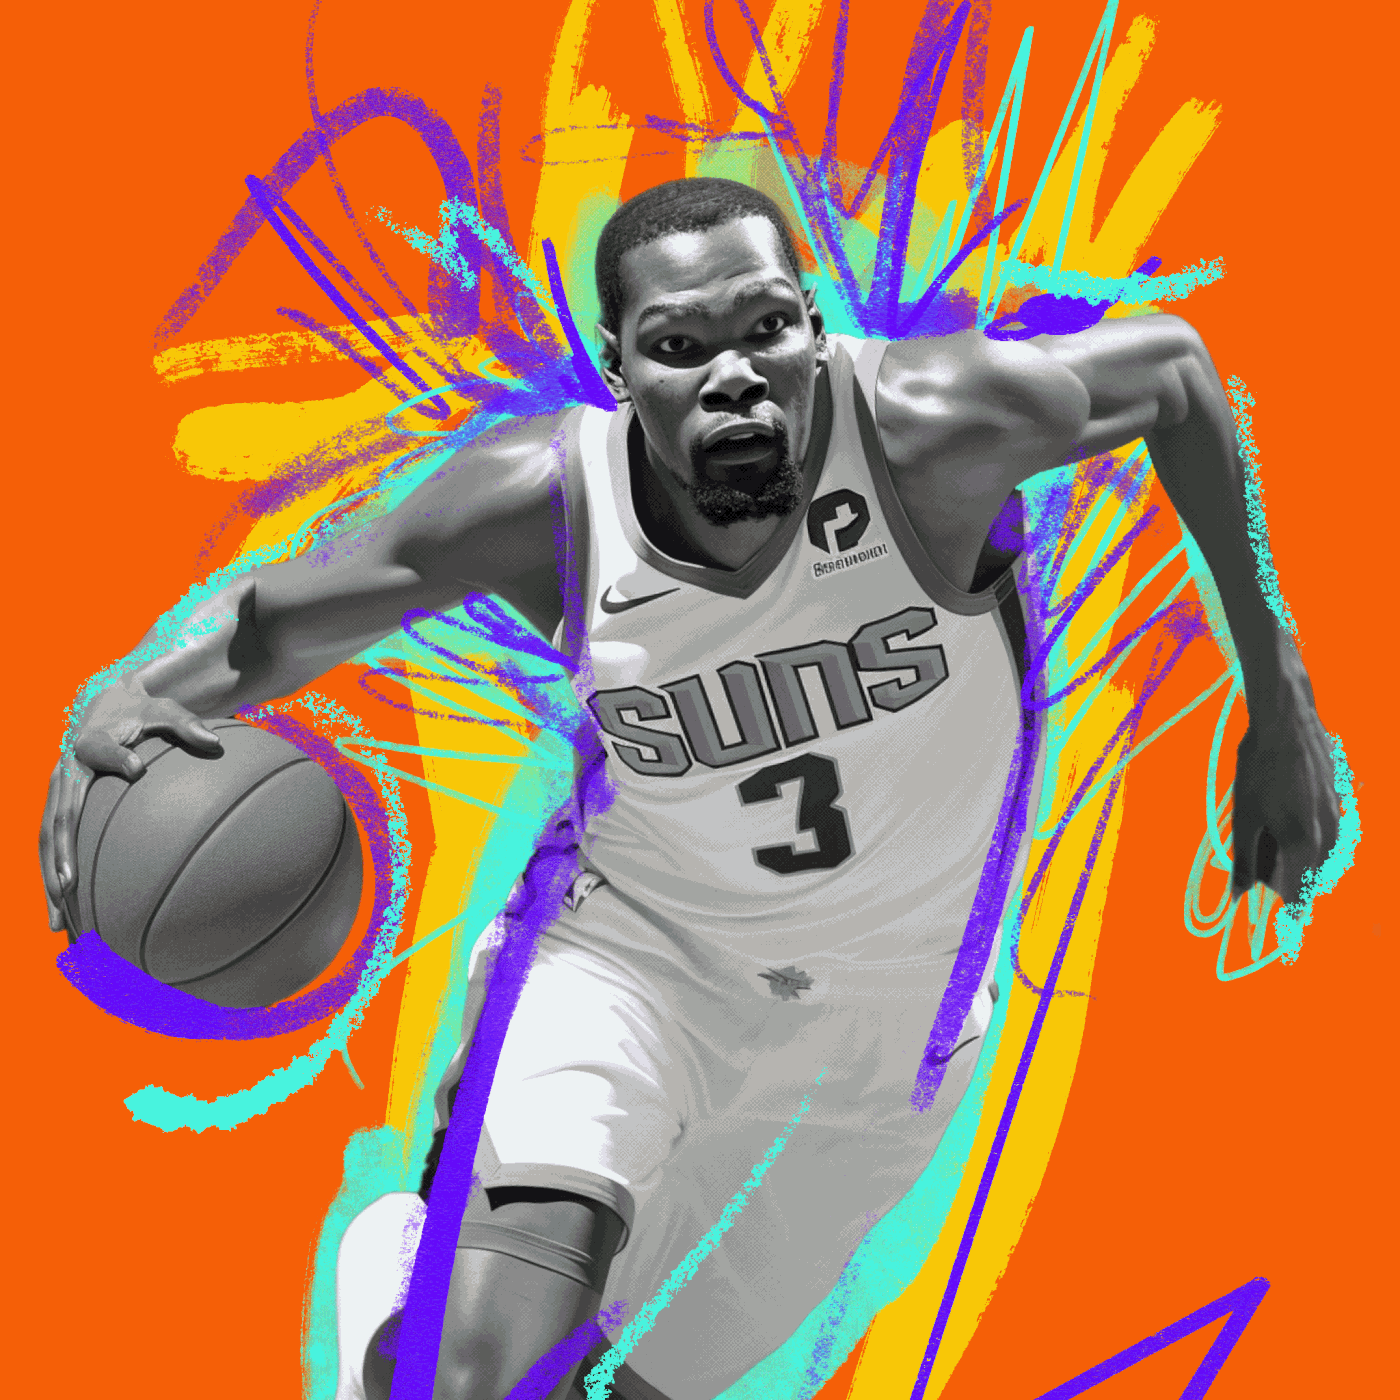 brushes NBA Illustrations illustrated illustrations digital illustration Illustrated Basketball procreate illustrations